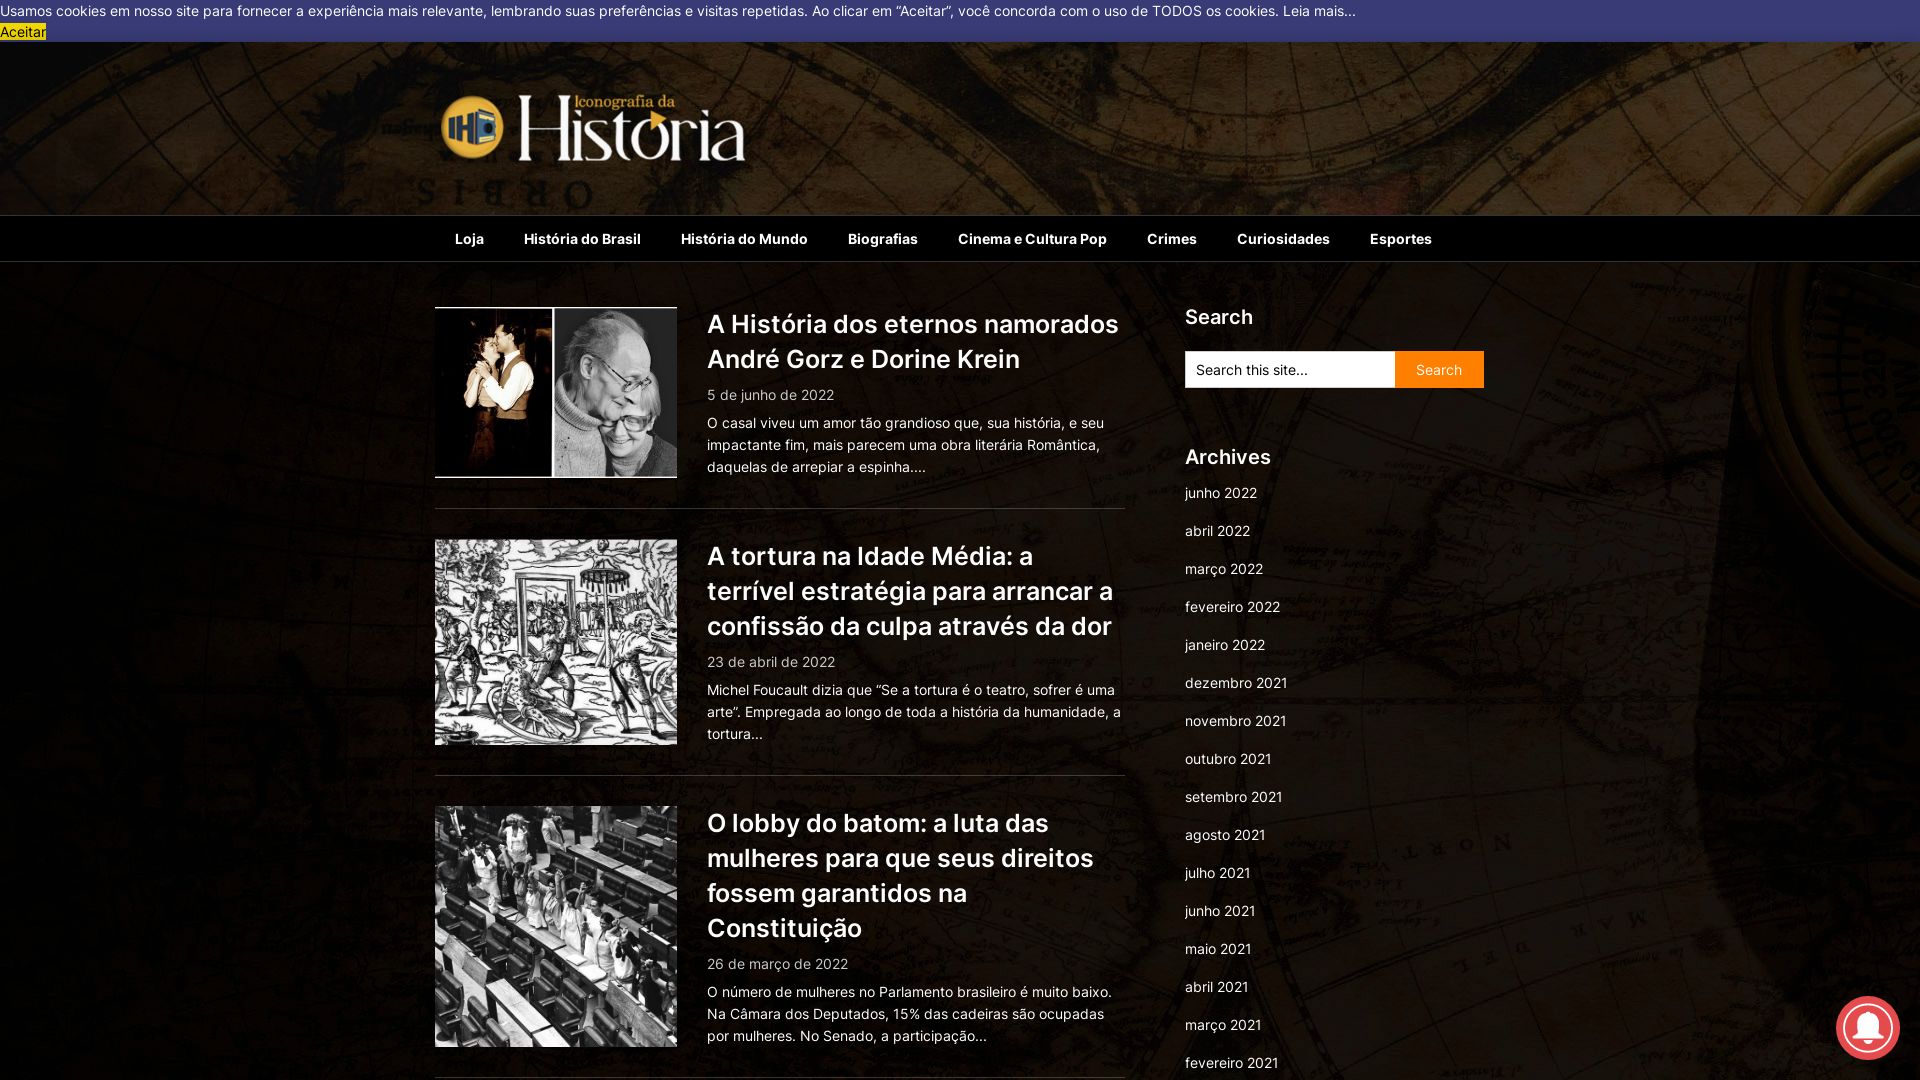 Website status iconografiadahistoria.com.br is   ONLINE